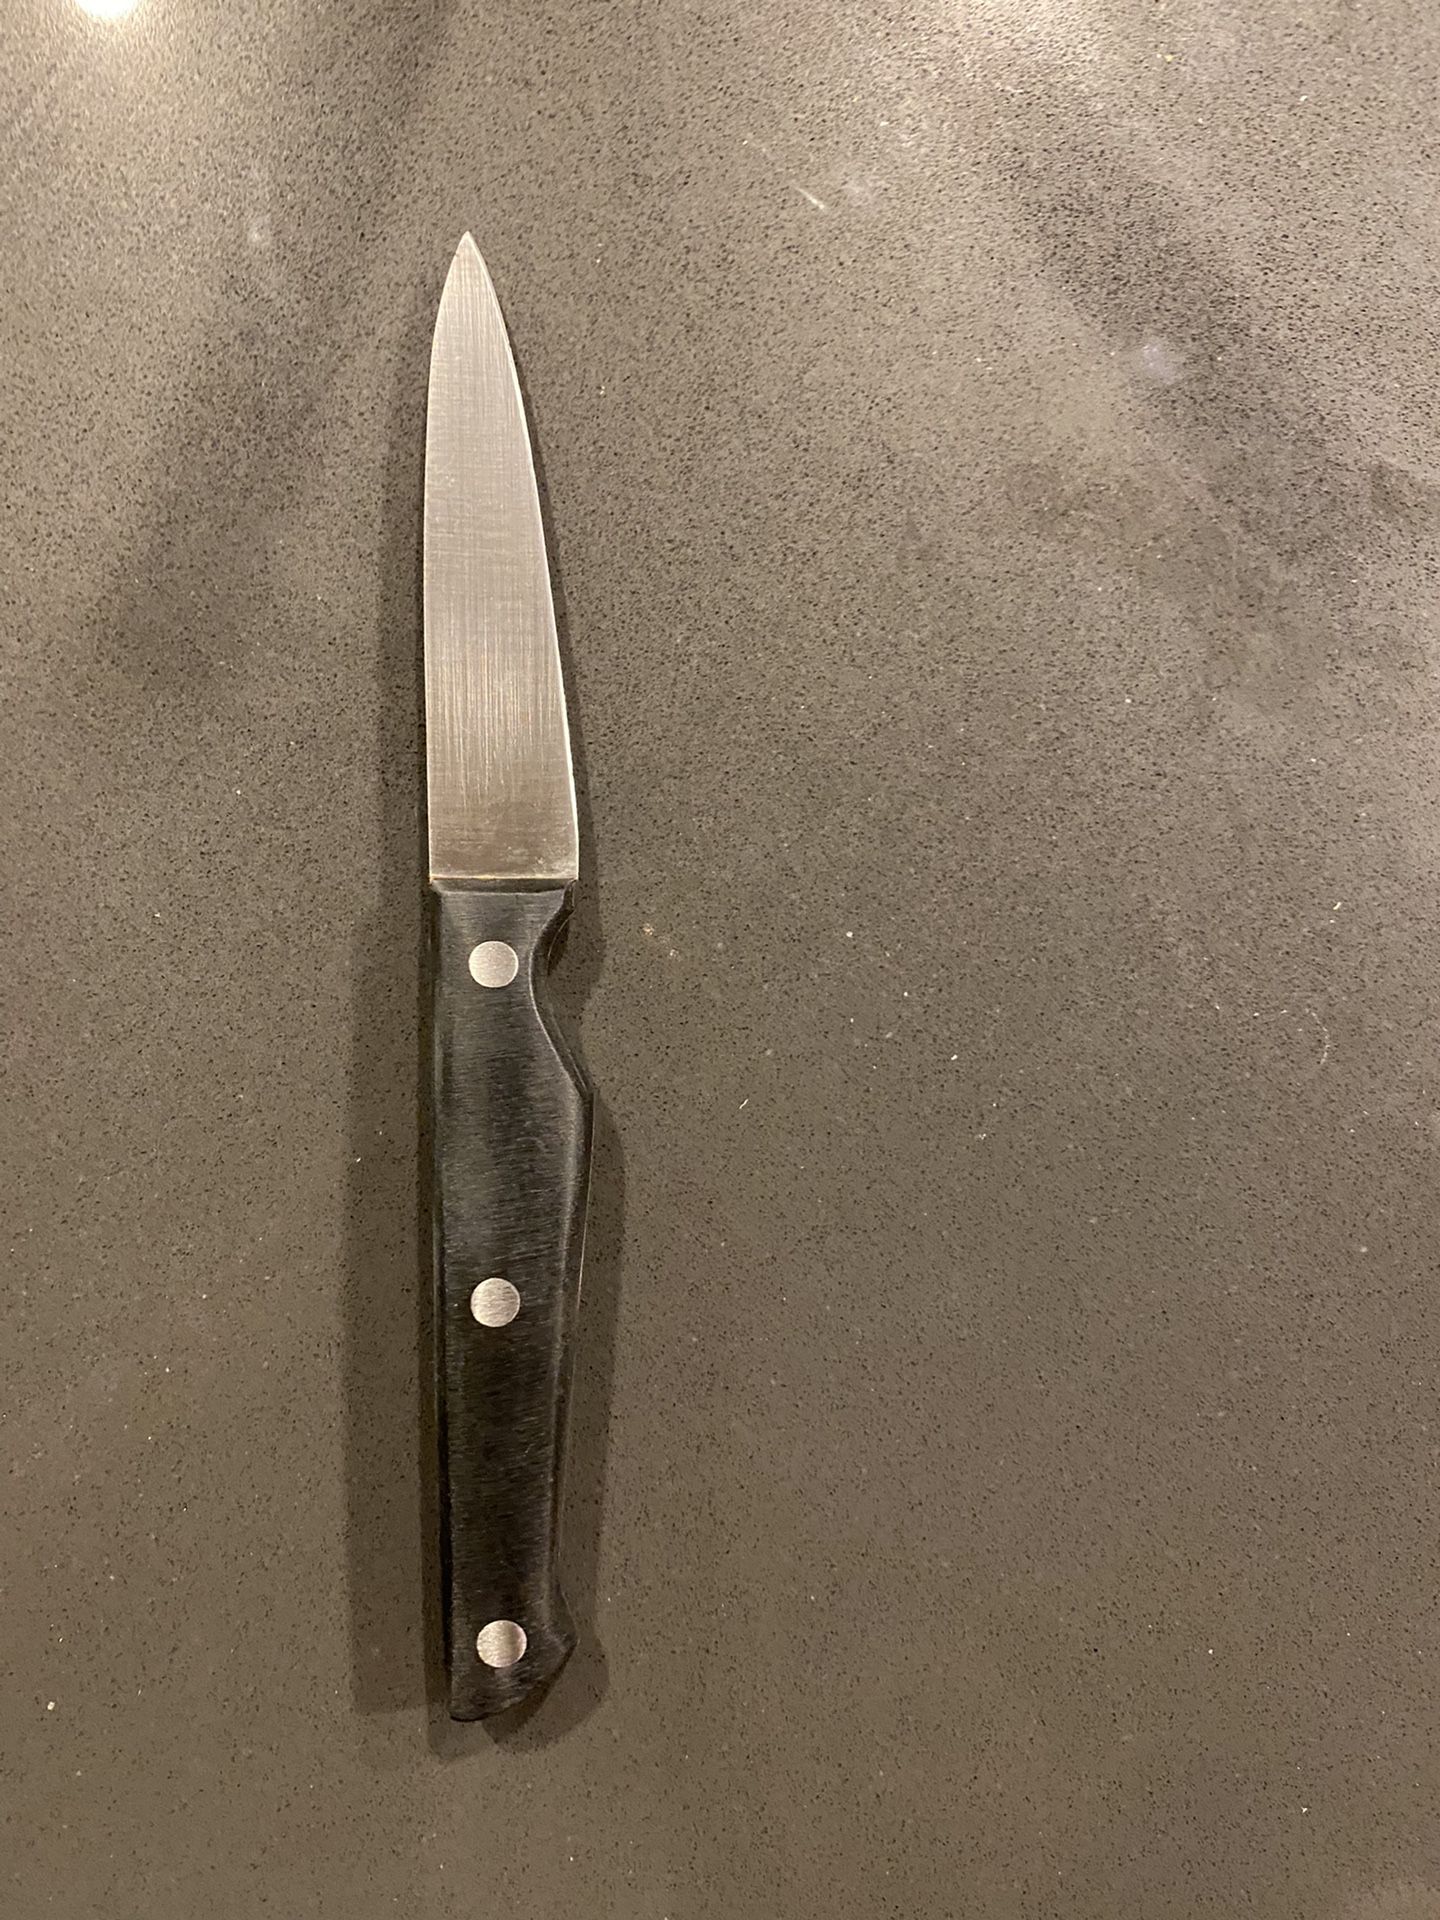 Rae Dunn Knife Set for Sale in Greenville, SC - OfferUp